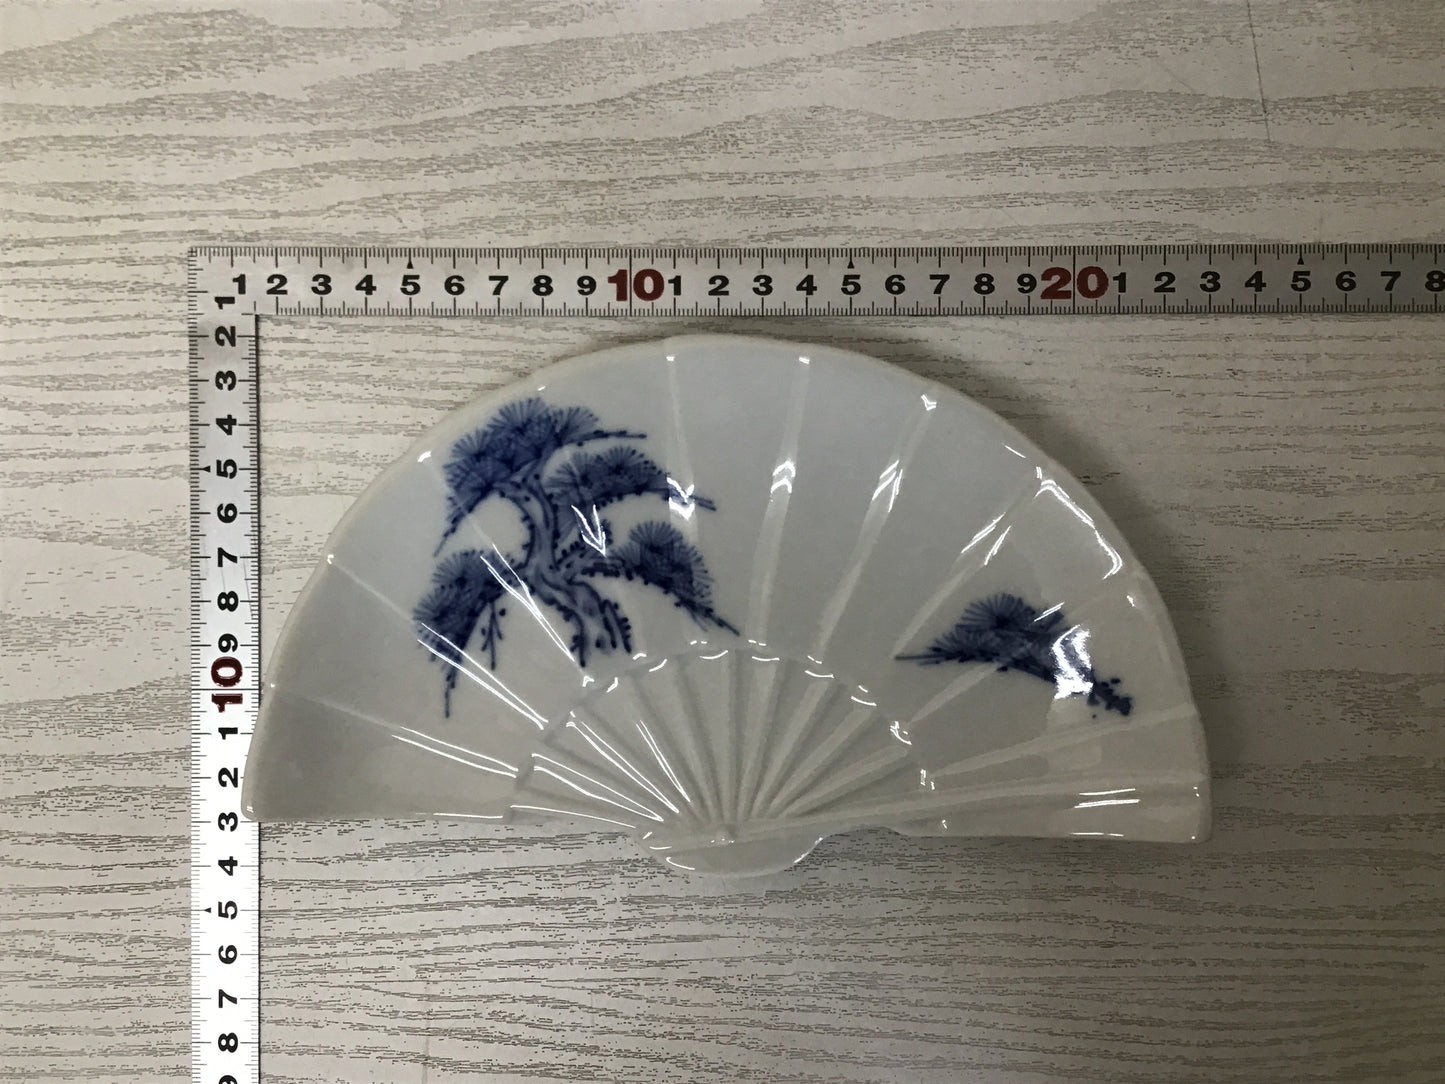 Y1505 DISH Seto-ware fan shape set of 5 signed box Japanese antique Japan